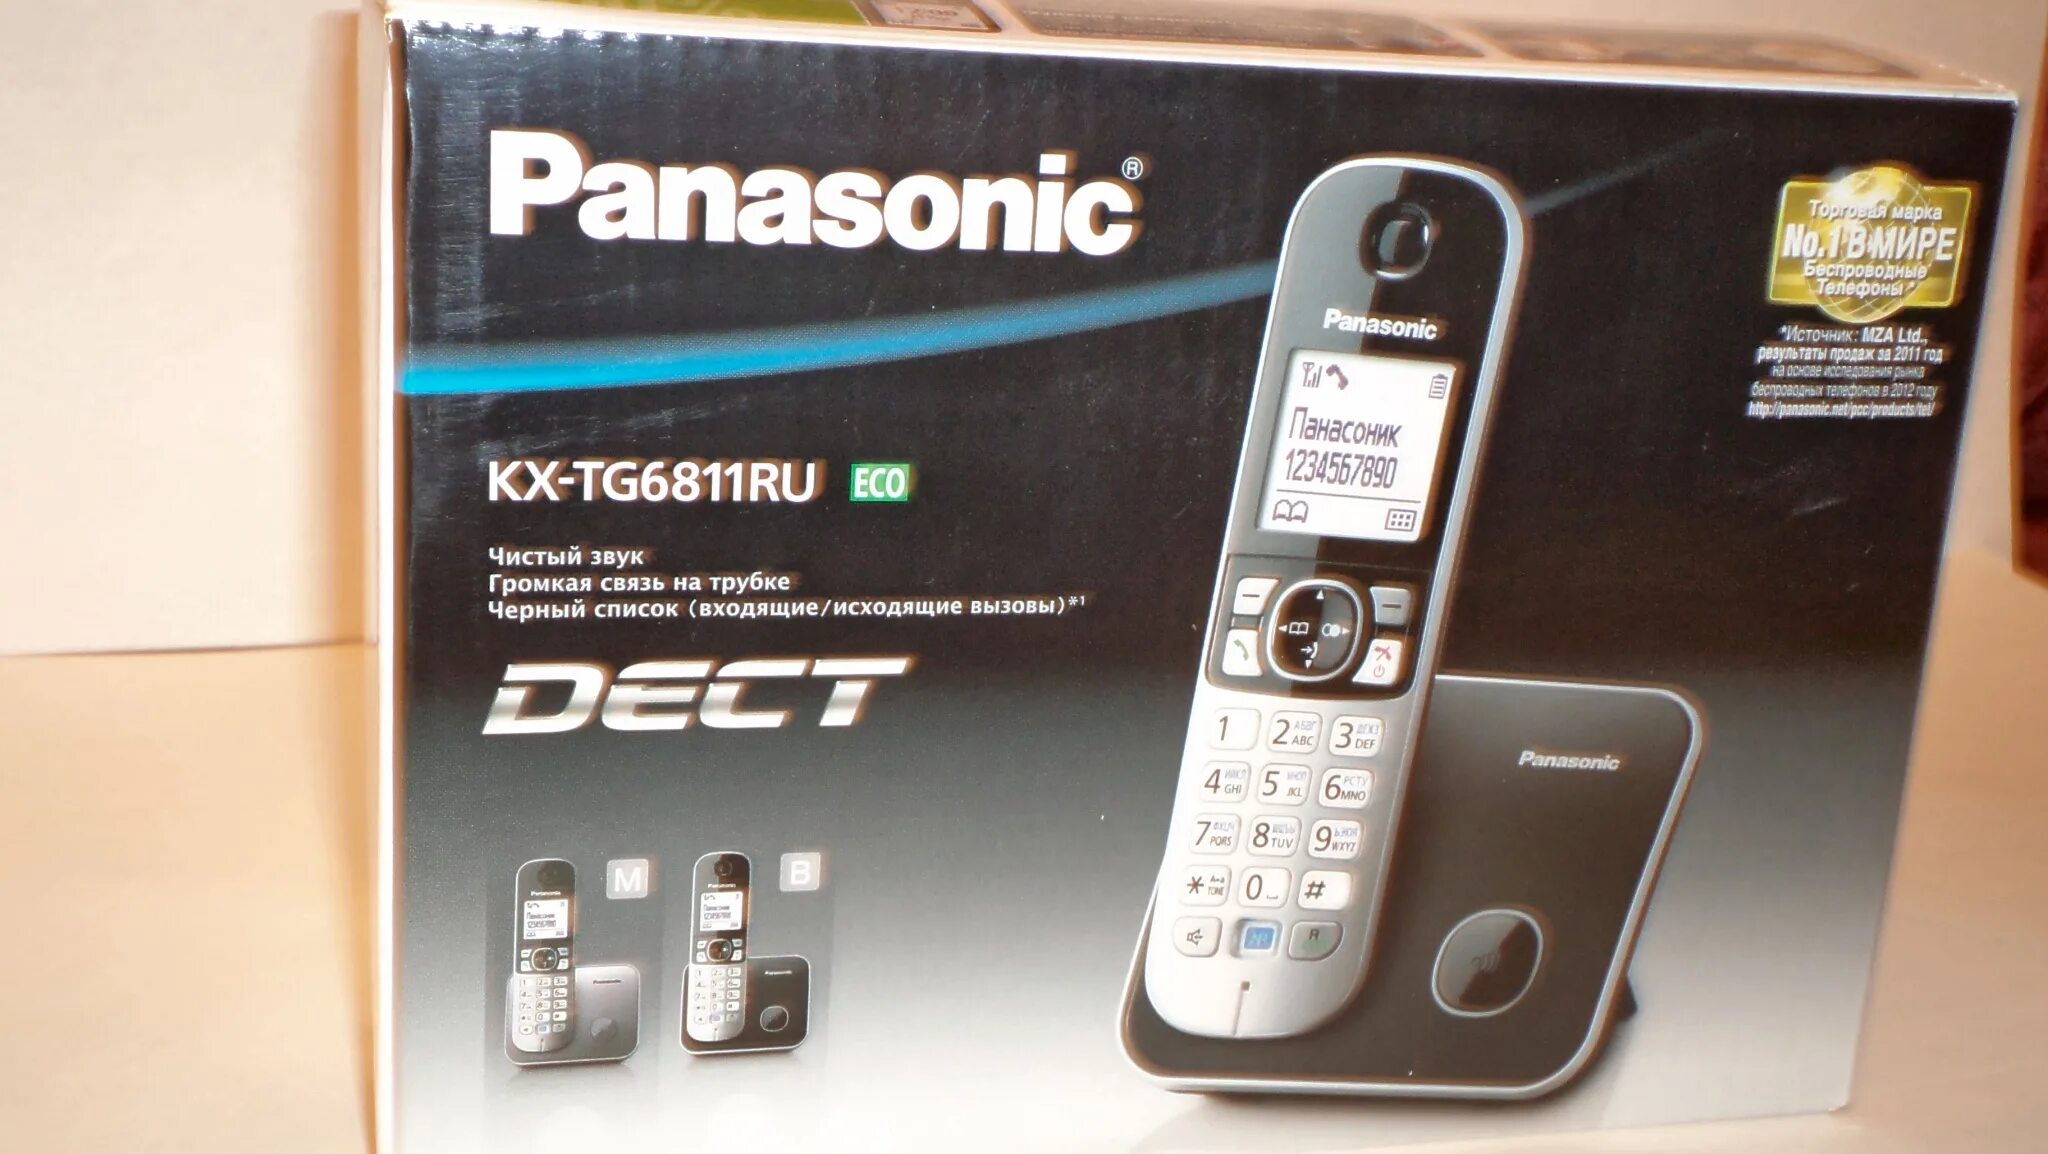 Panasonic kx tg6811rub. Радиотелефон Panasonic KX-tg6811rub. Радиотелефон Panasonic KX-tg6811uam. Радиотелефон Panasonic KX-tg6811 rum Metallic Grey. Tg6811 Panasonic.